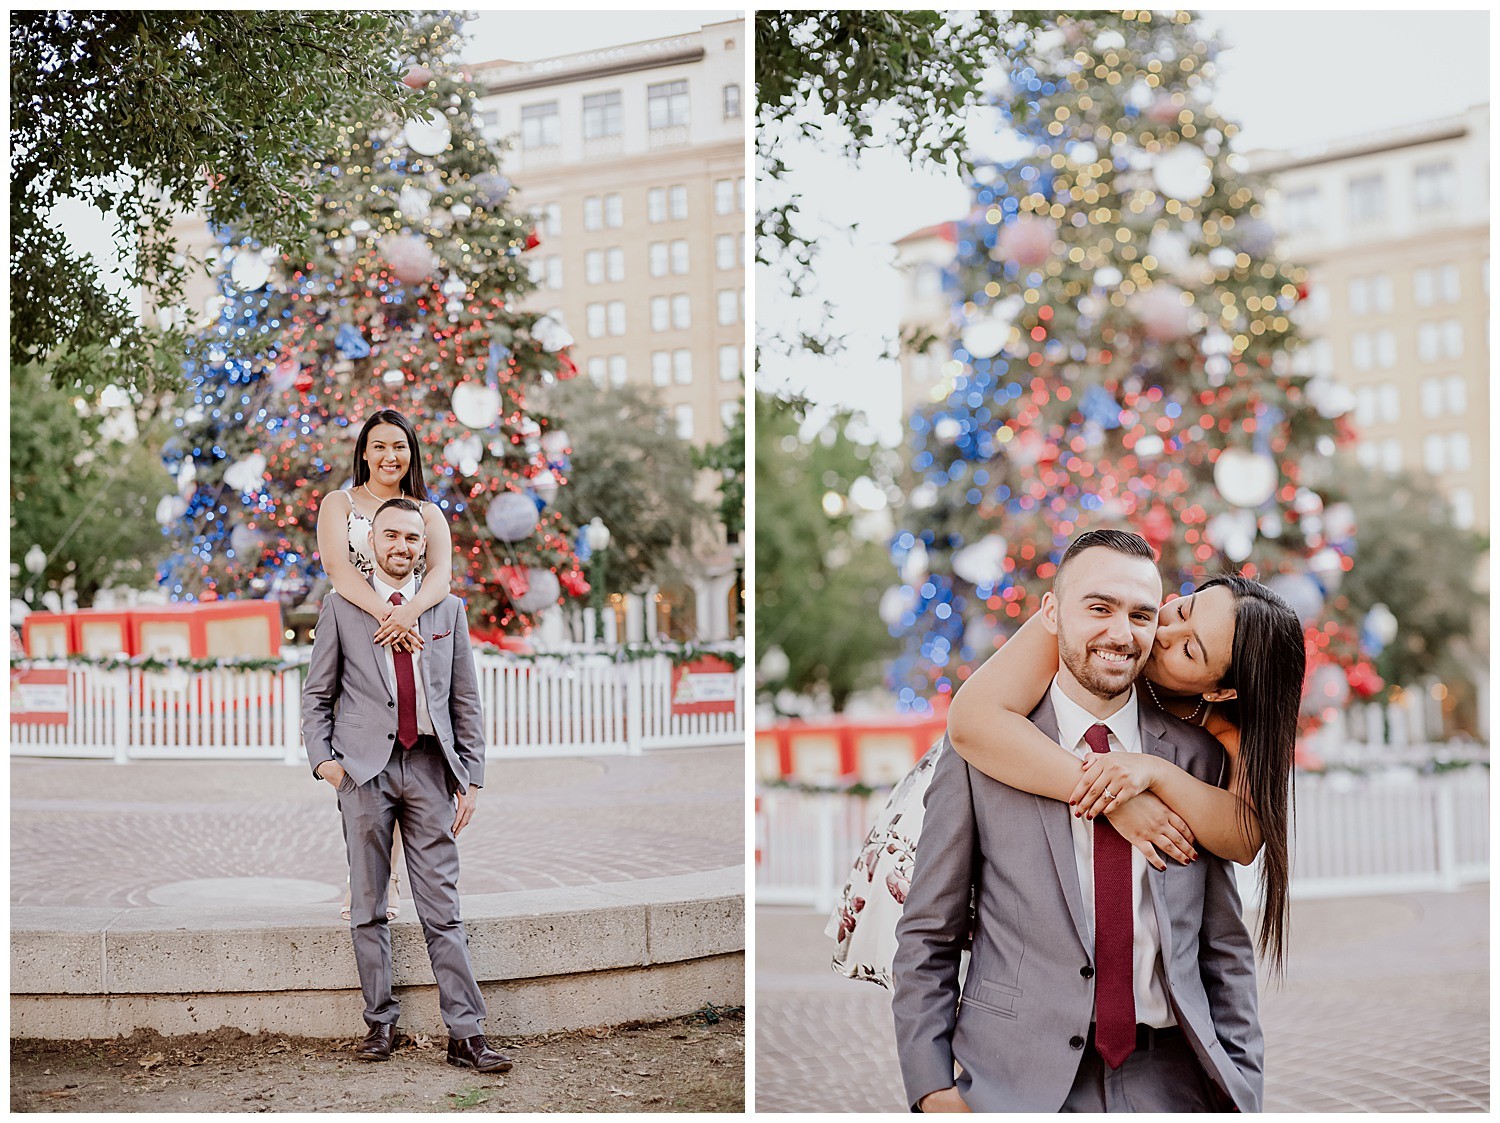 Downtown Christmas Holidays Engagement Shoot in San Antonio Texas-Leica photographer-Philip Thomas Photography